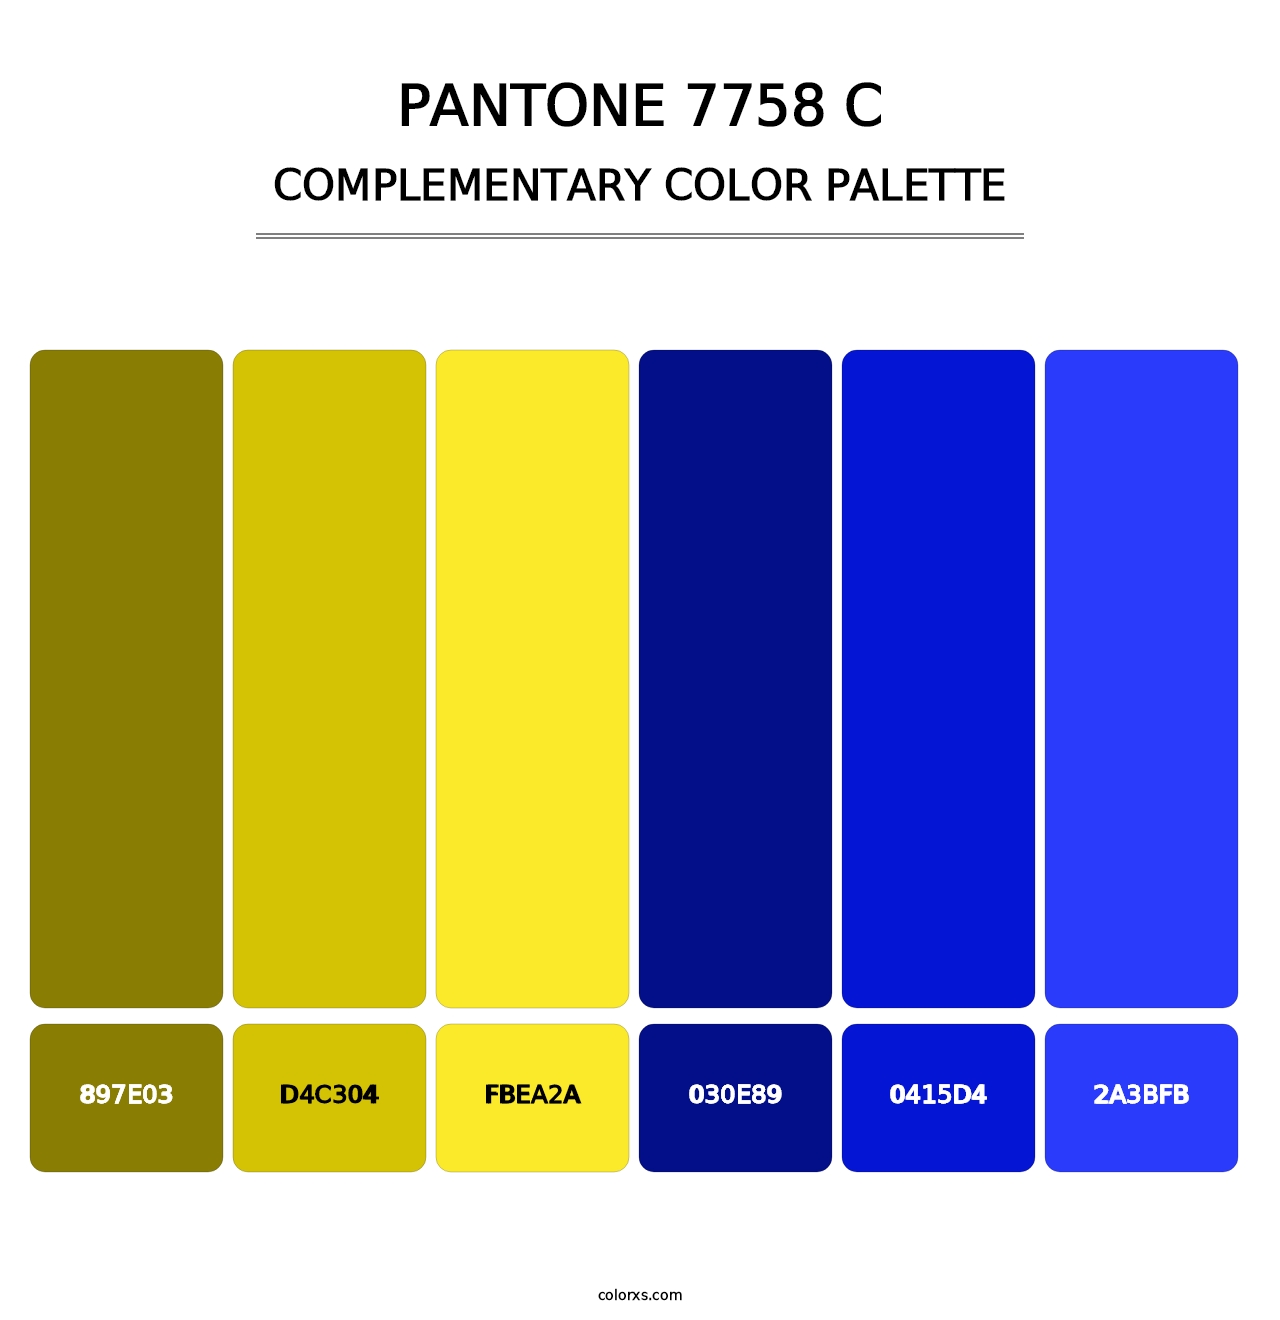 PANTONE 7758 C - Complementary Color Palette